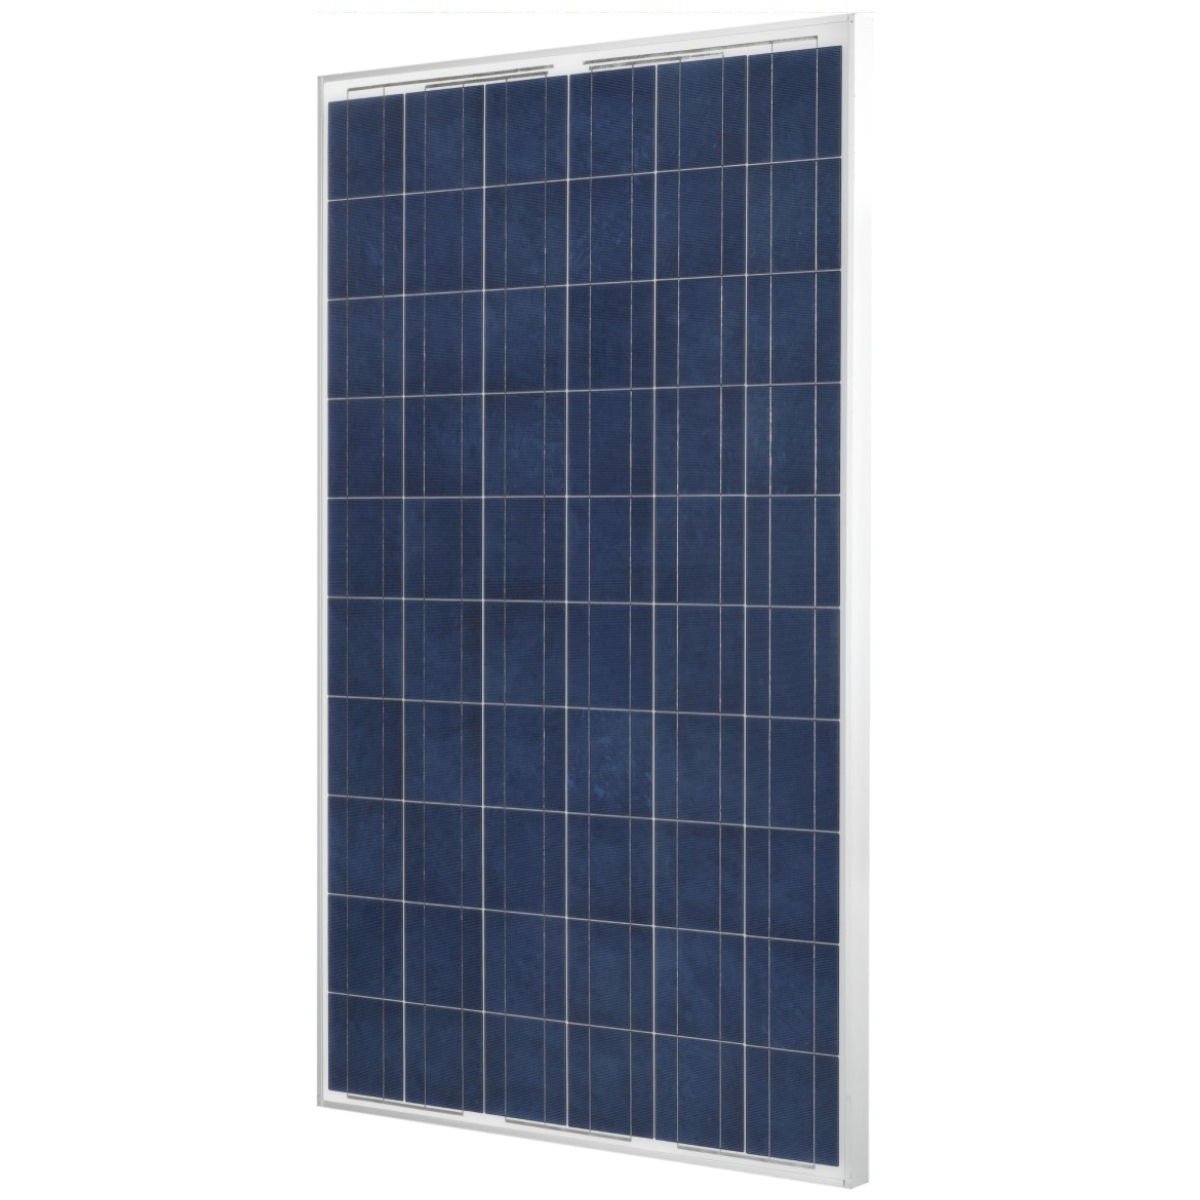 JWS, Solarpanel Solarmodul Solarzelle 285Watt Photovoltaik Solar 285W 24V Off ON Grid, Hoher Wirkungsgrad